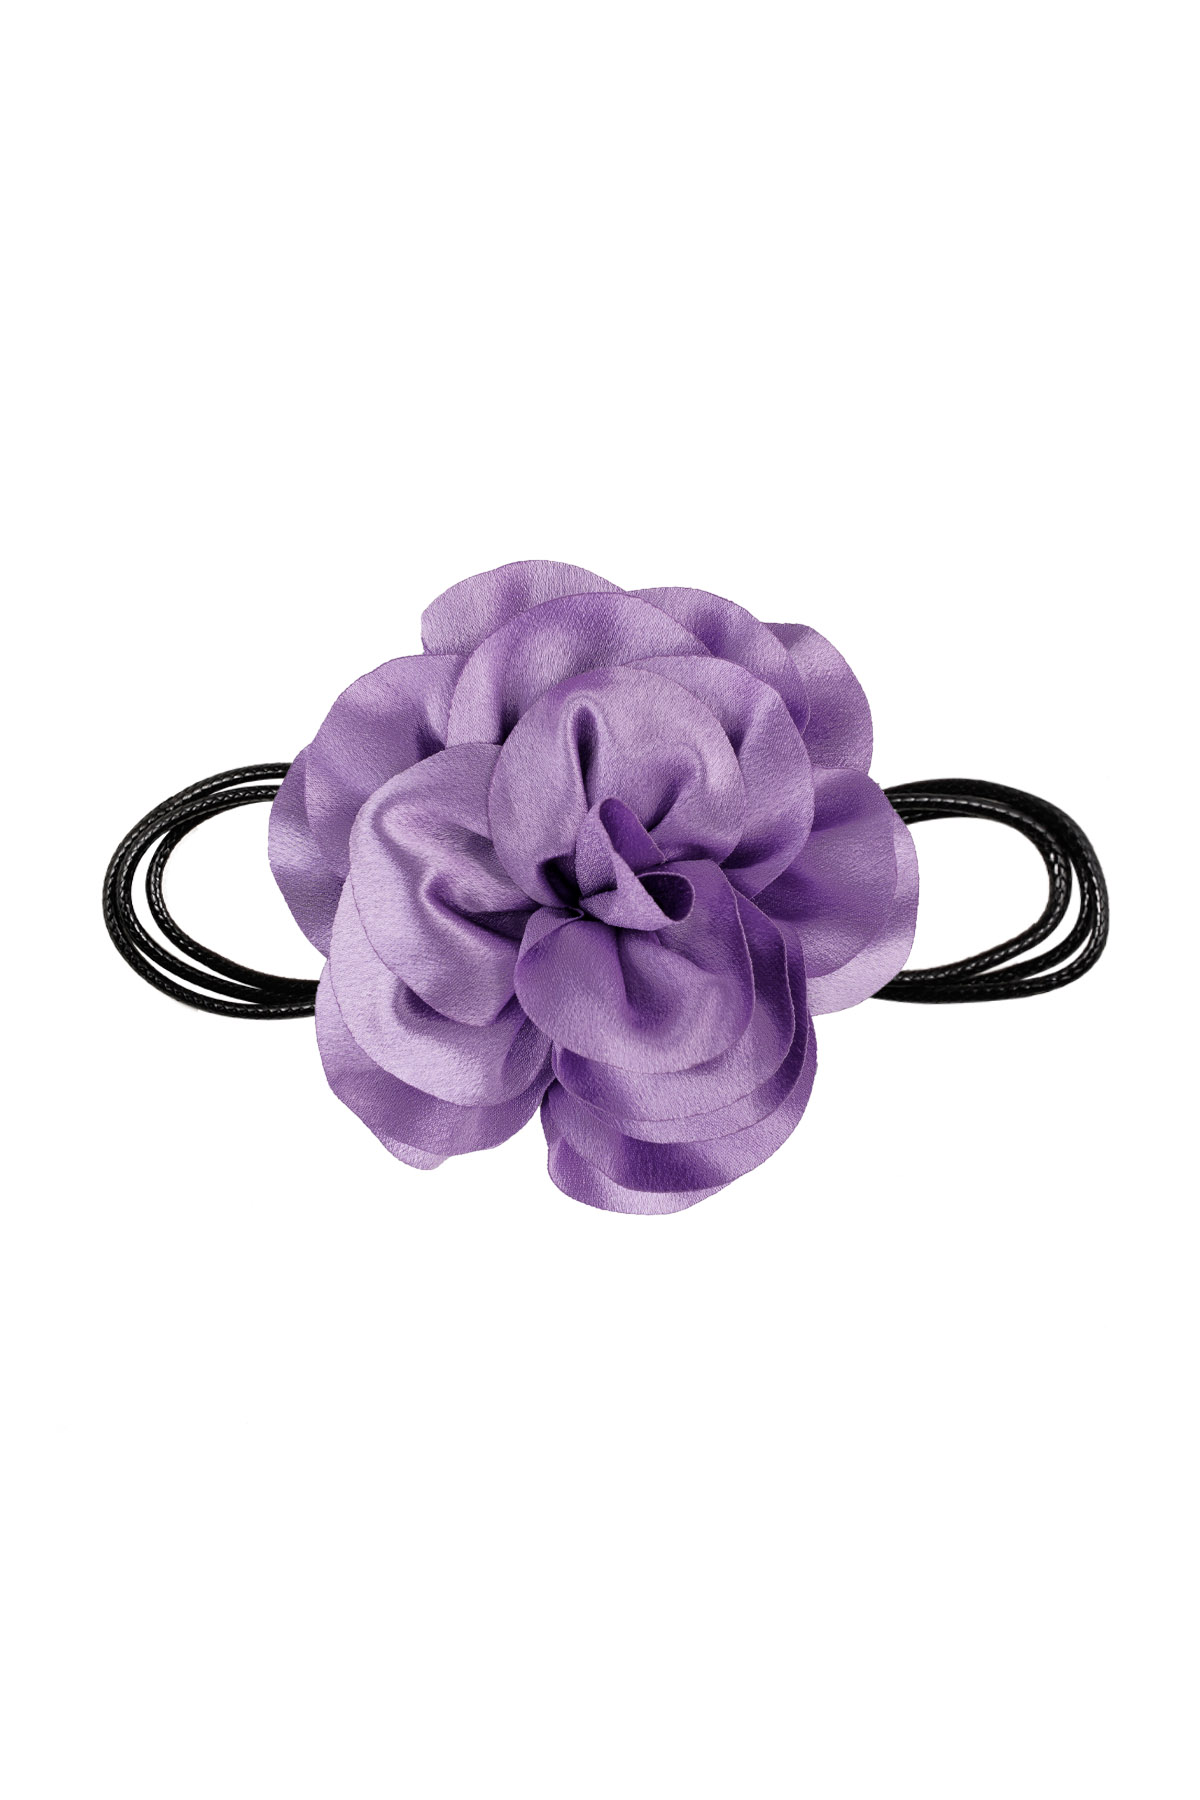 Halskette Seil glänzende Blume - lila 